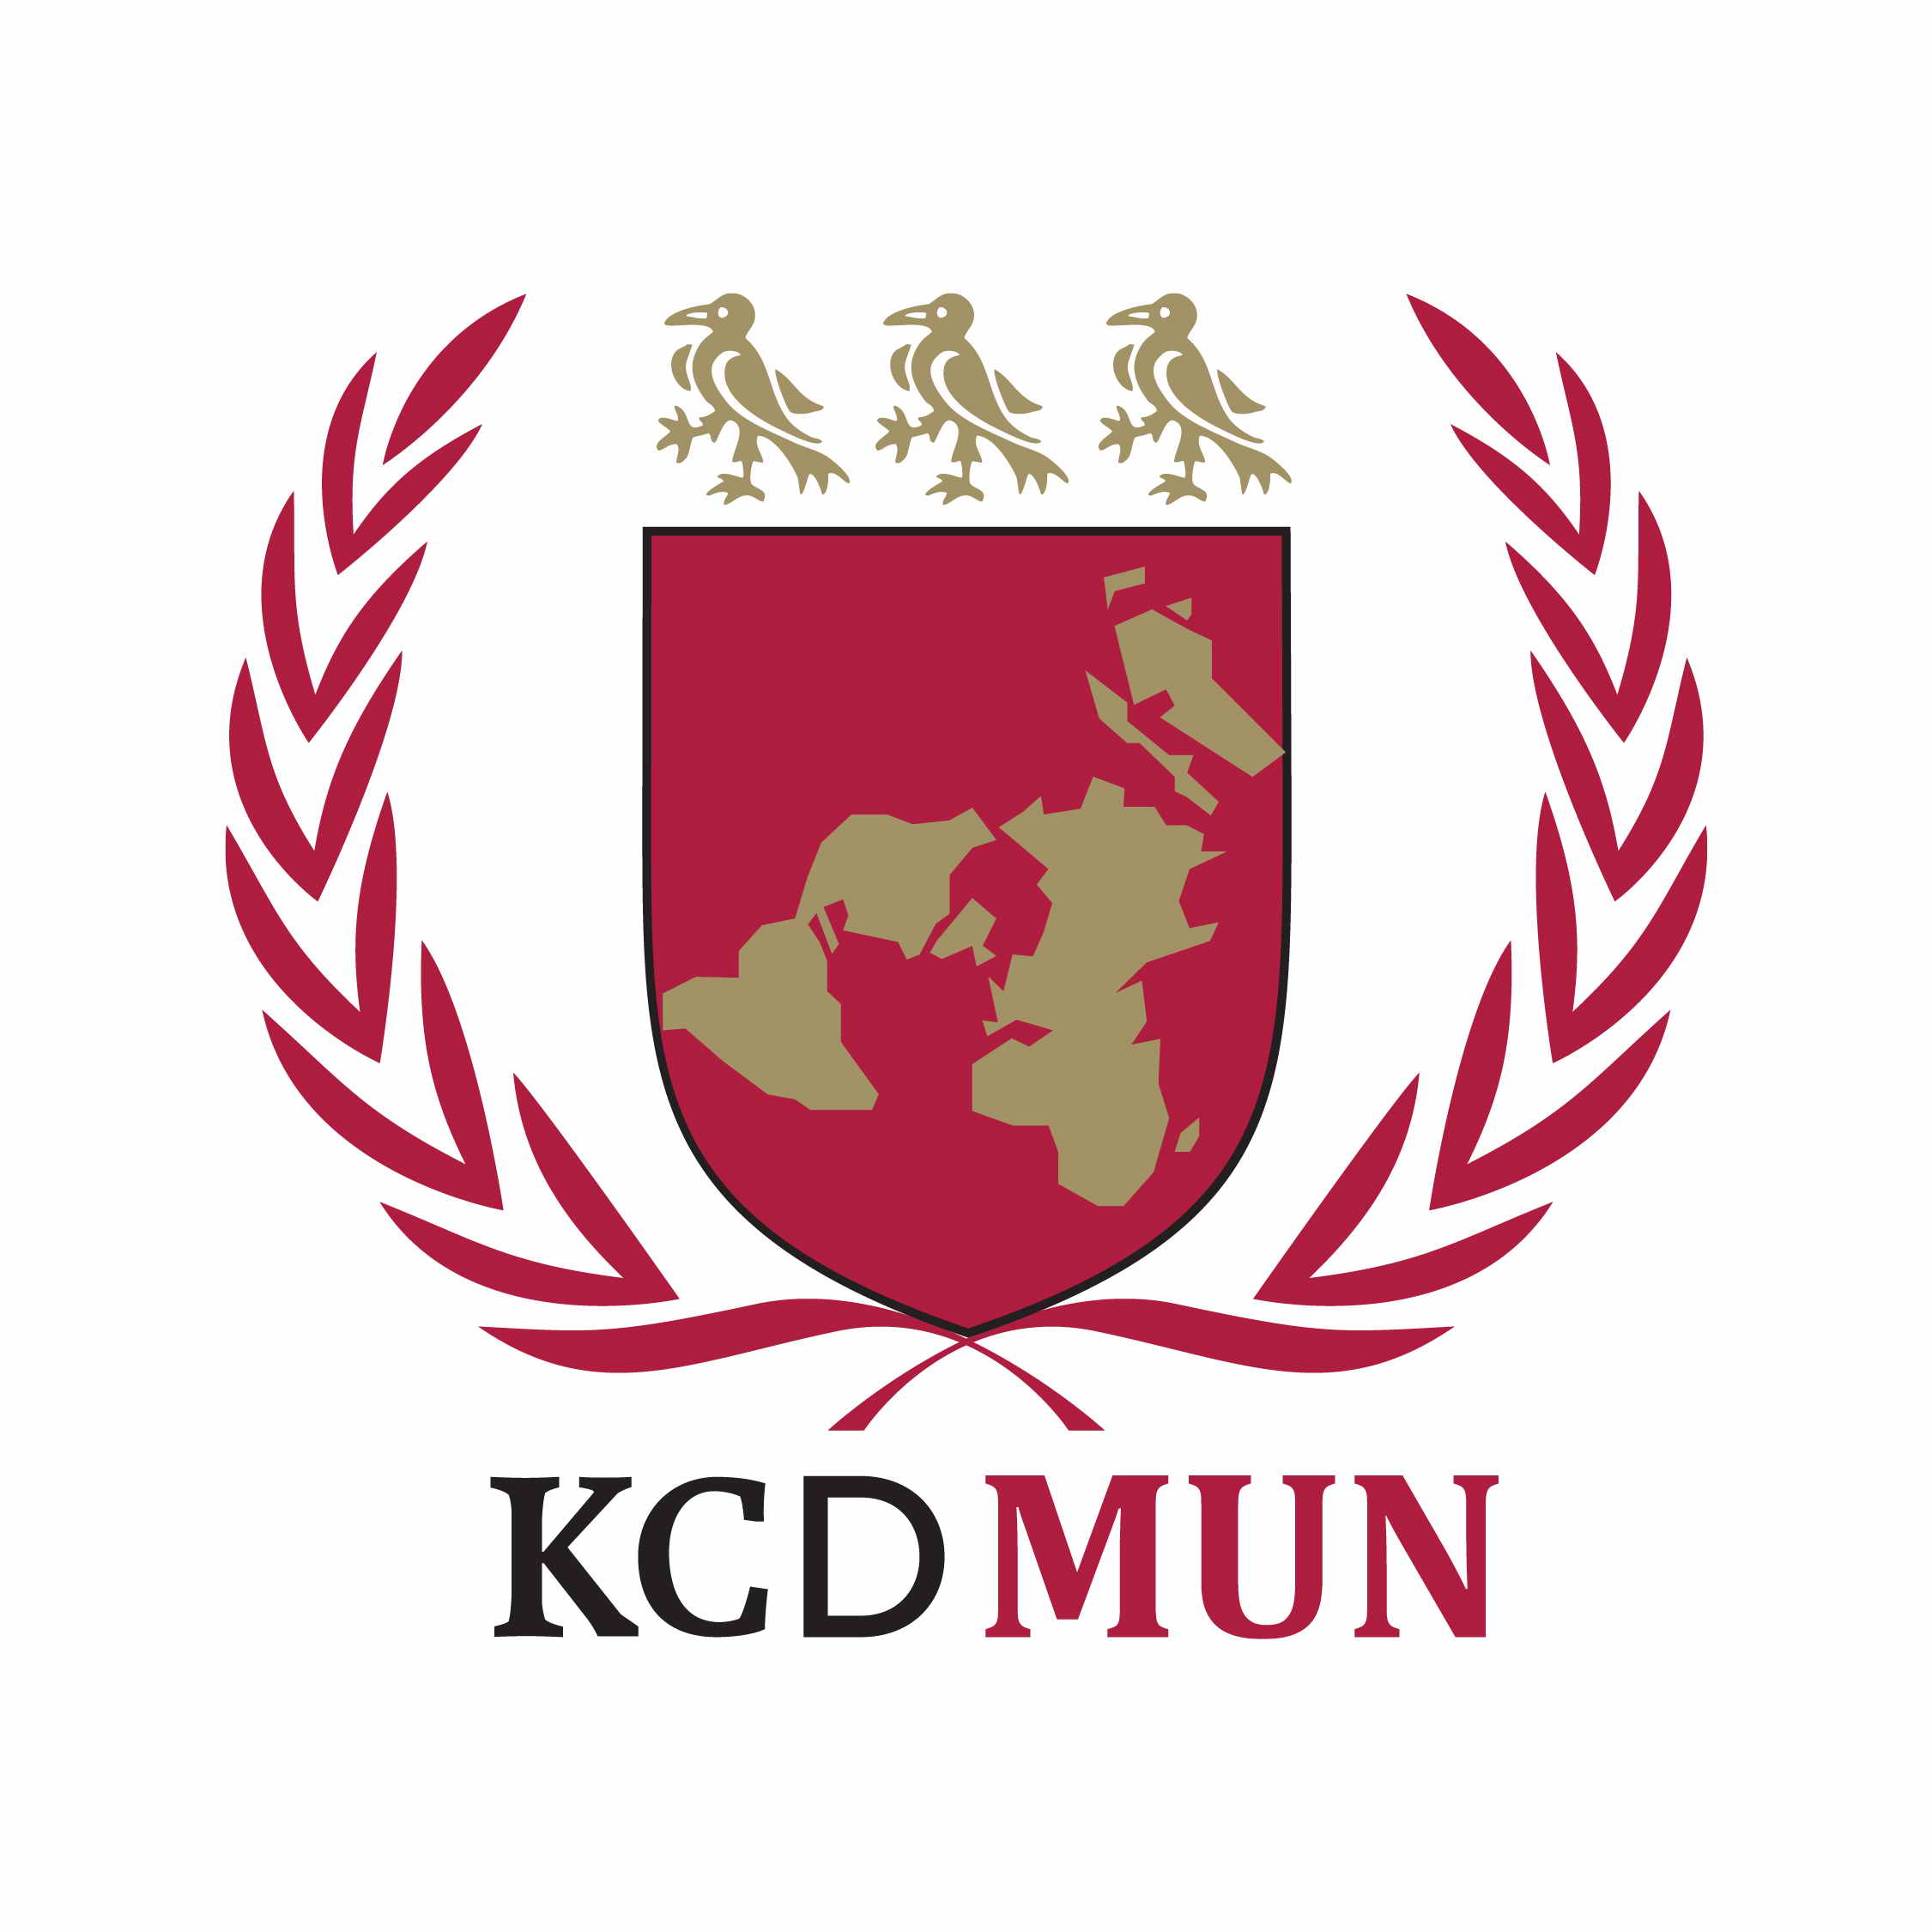 KCD MUN logo